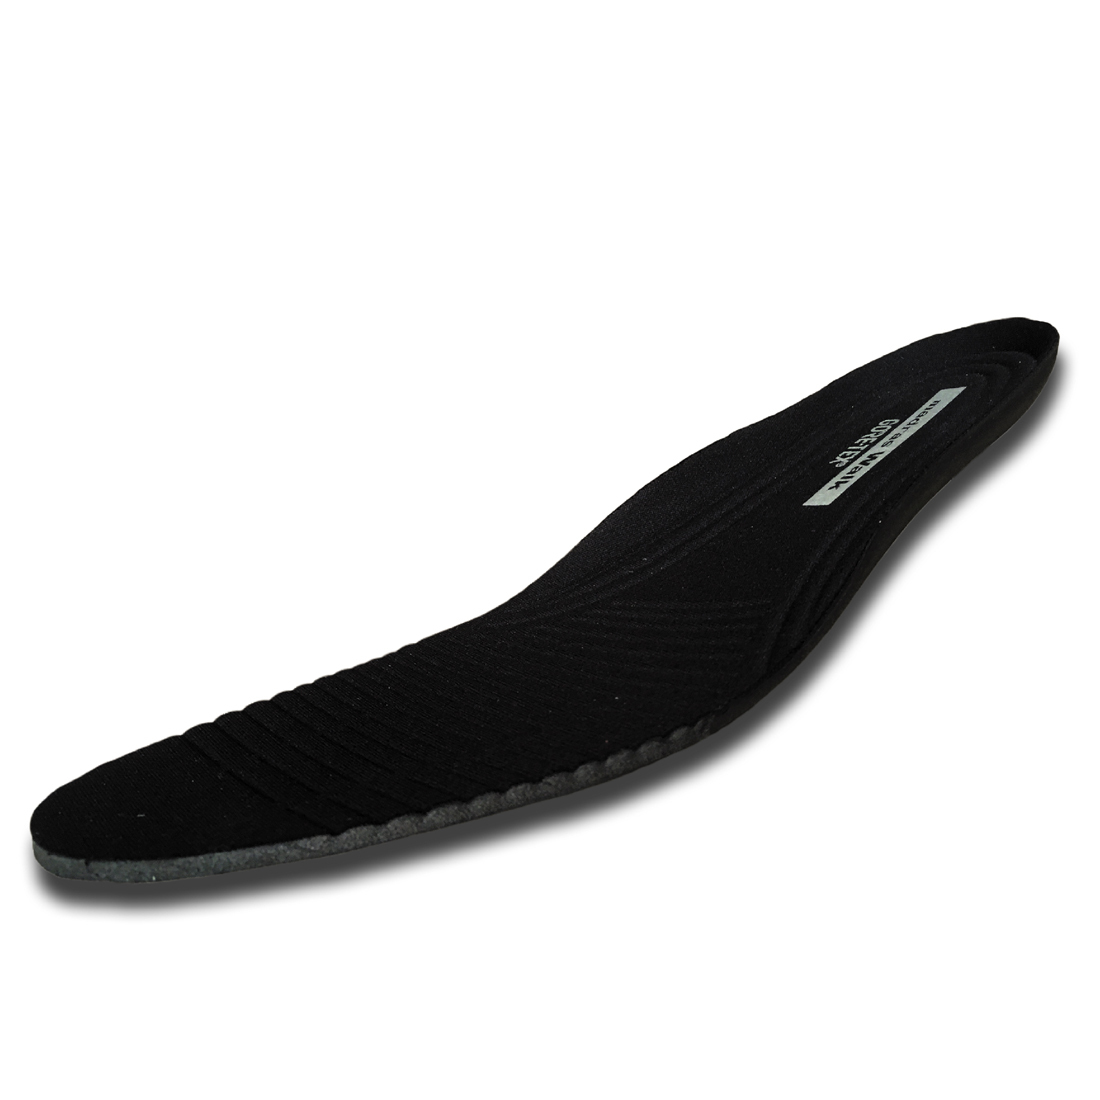 ^madras Walkma gong s walking casual shoes Gore-Tex MW8010 waterproof light brown light brown 25.5cm (0910010302-lb-s255)